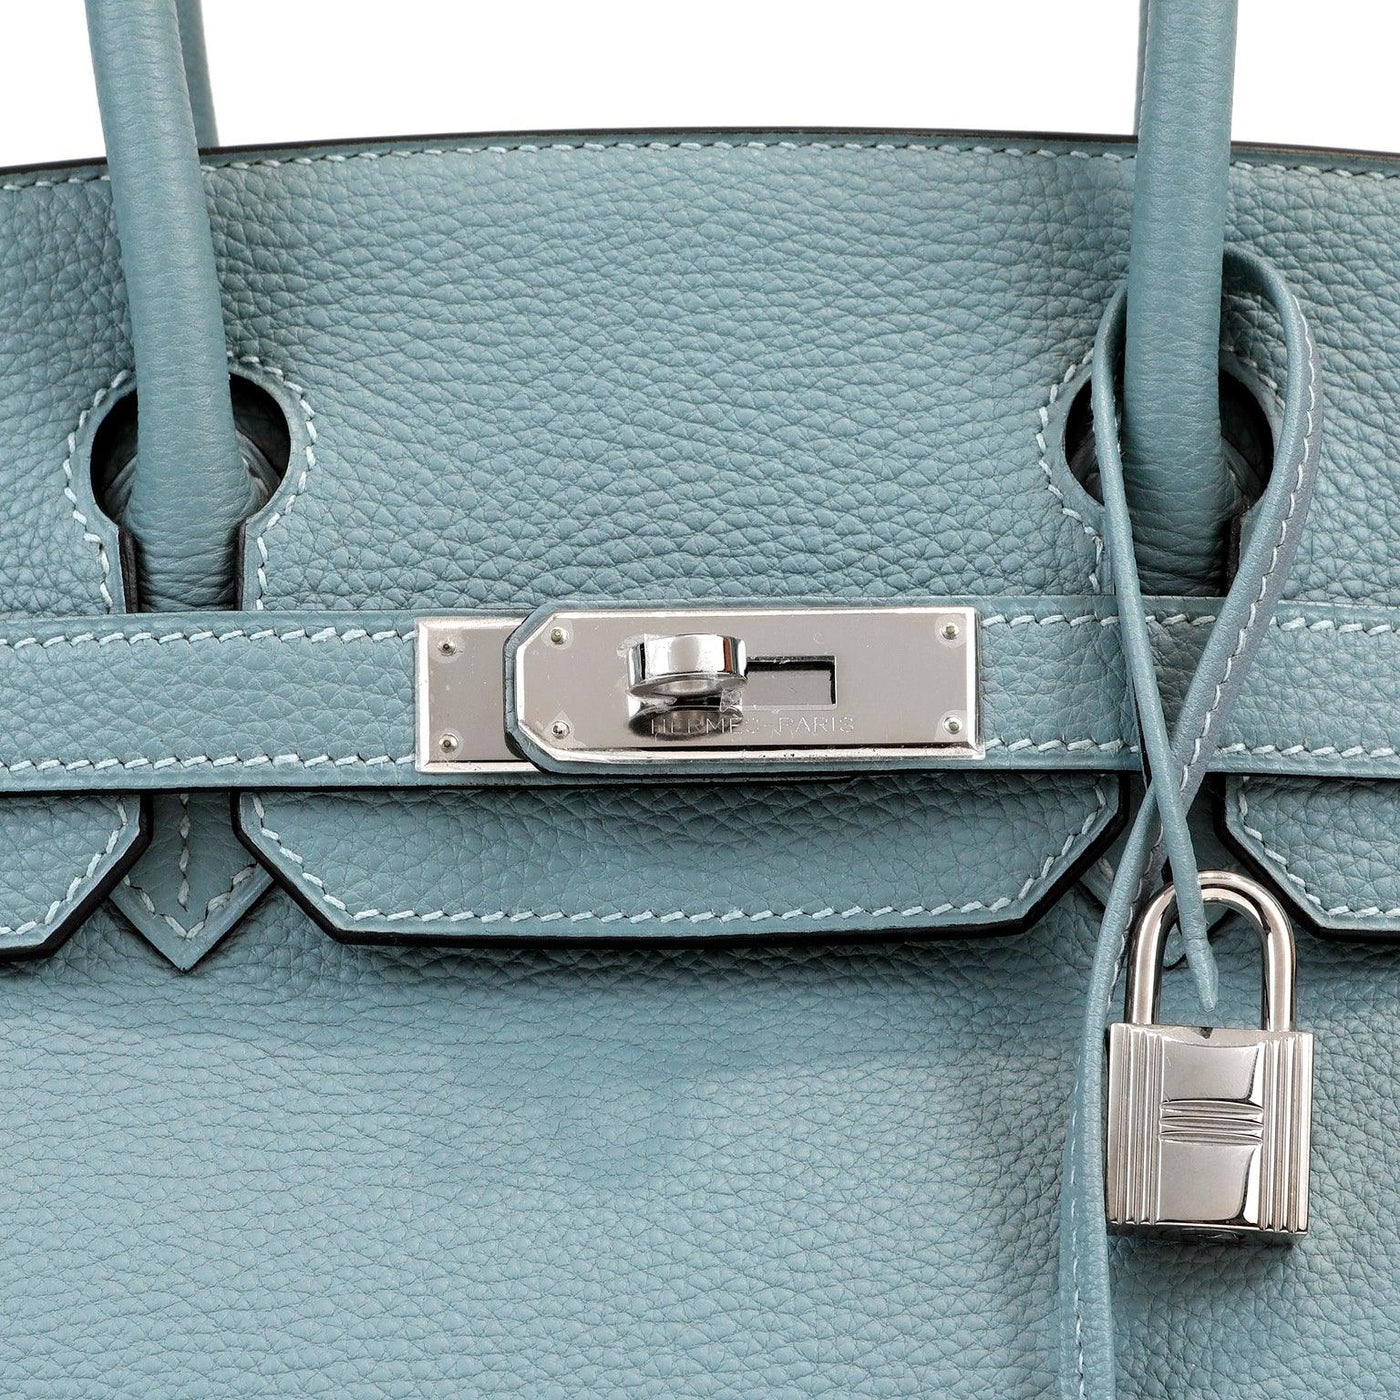 Hermès 30cm Blue Sky Togo Birkin Bag - Only Authentics